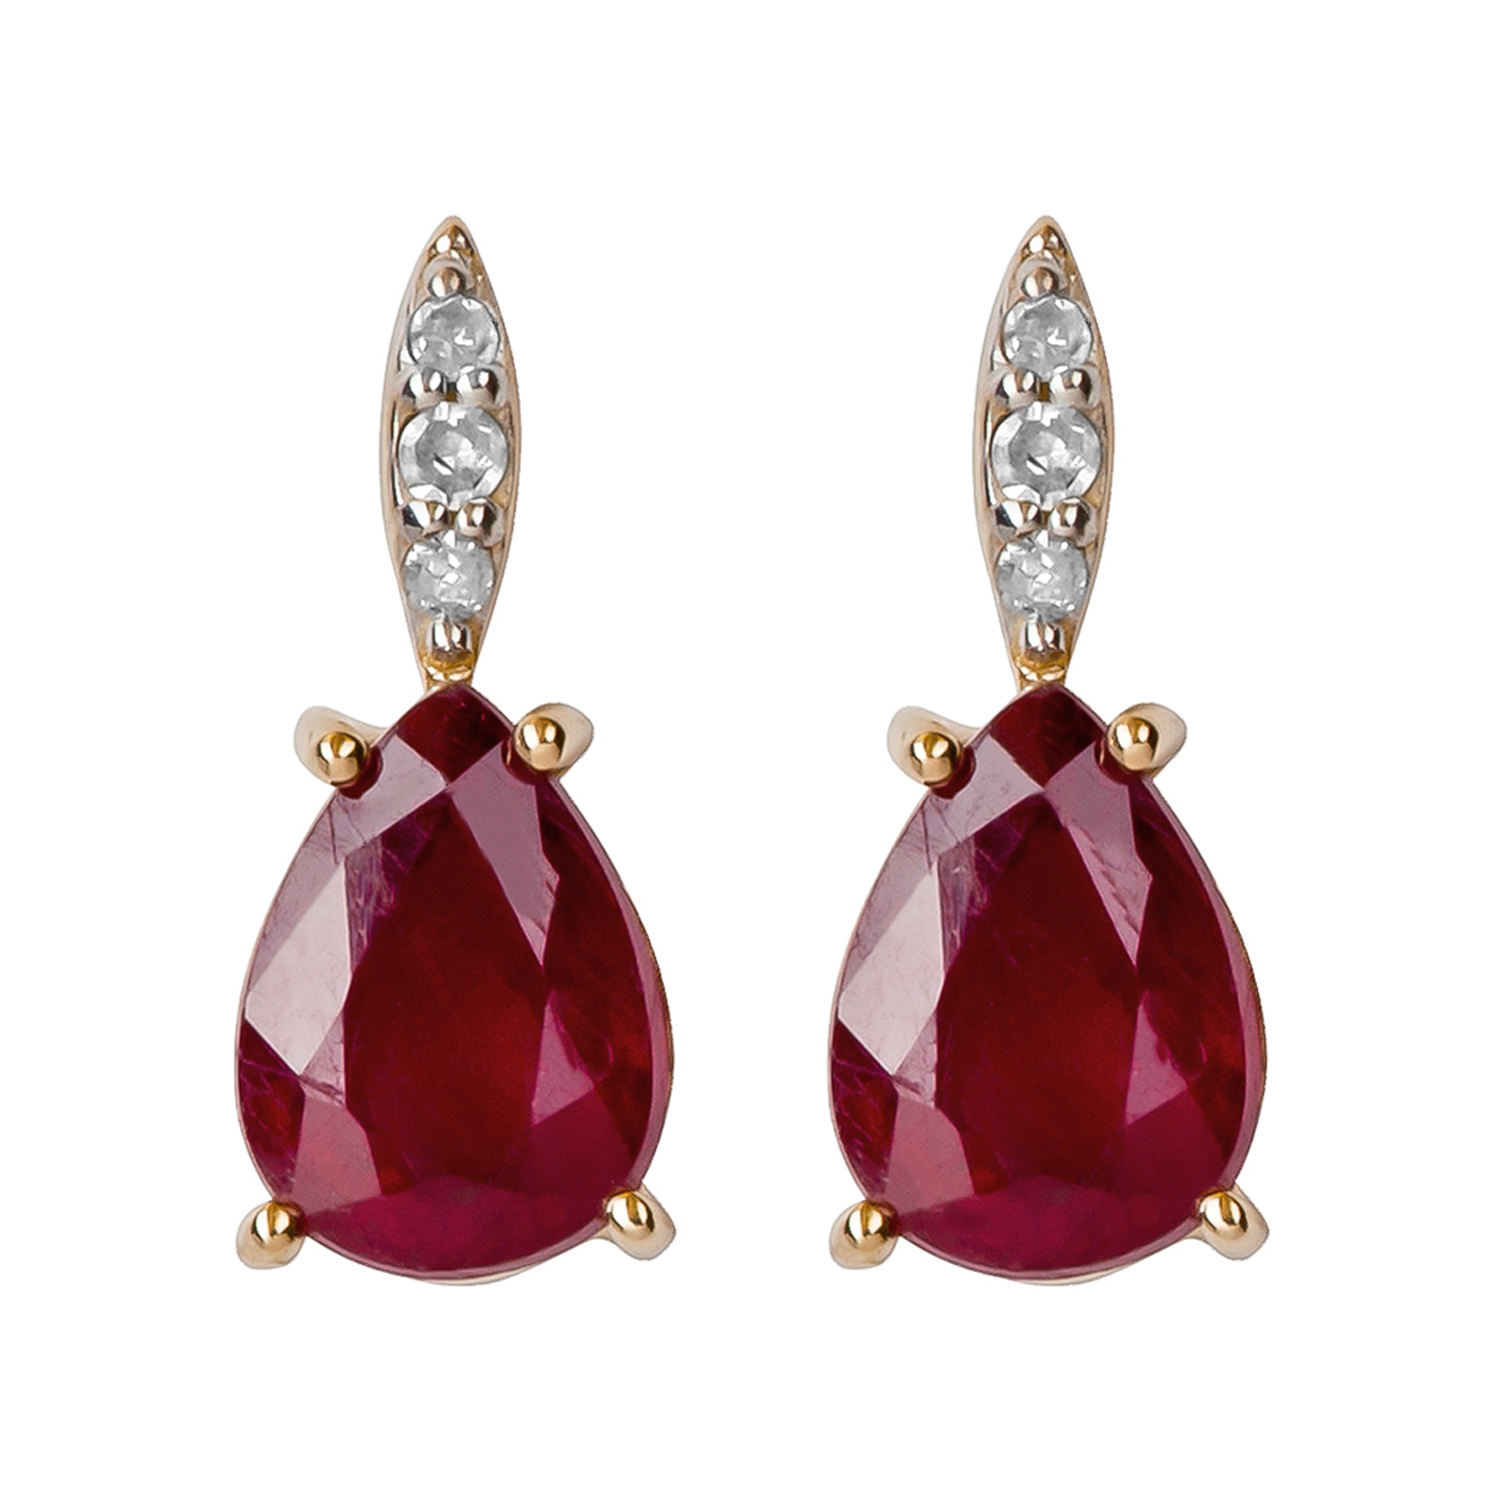 10k Yellow Gold Genuine Pear-Shape Ruby and Diamond Drop Earrings | eBay